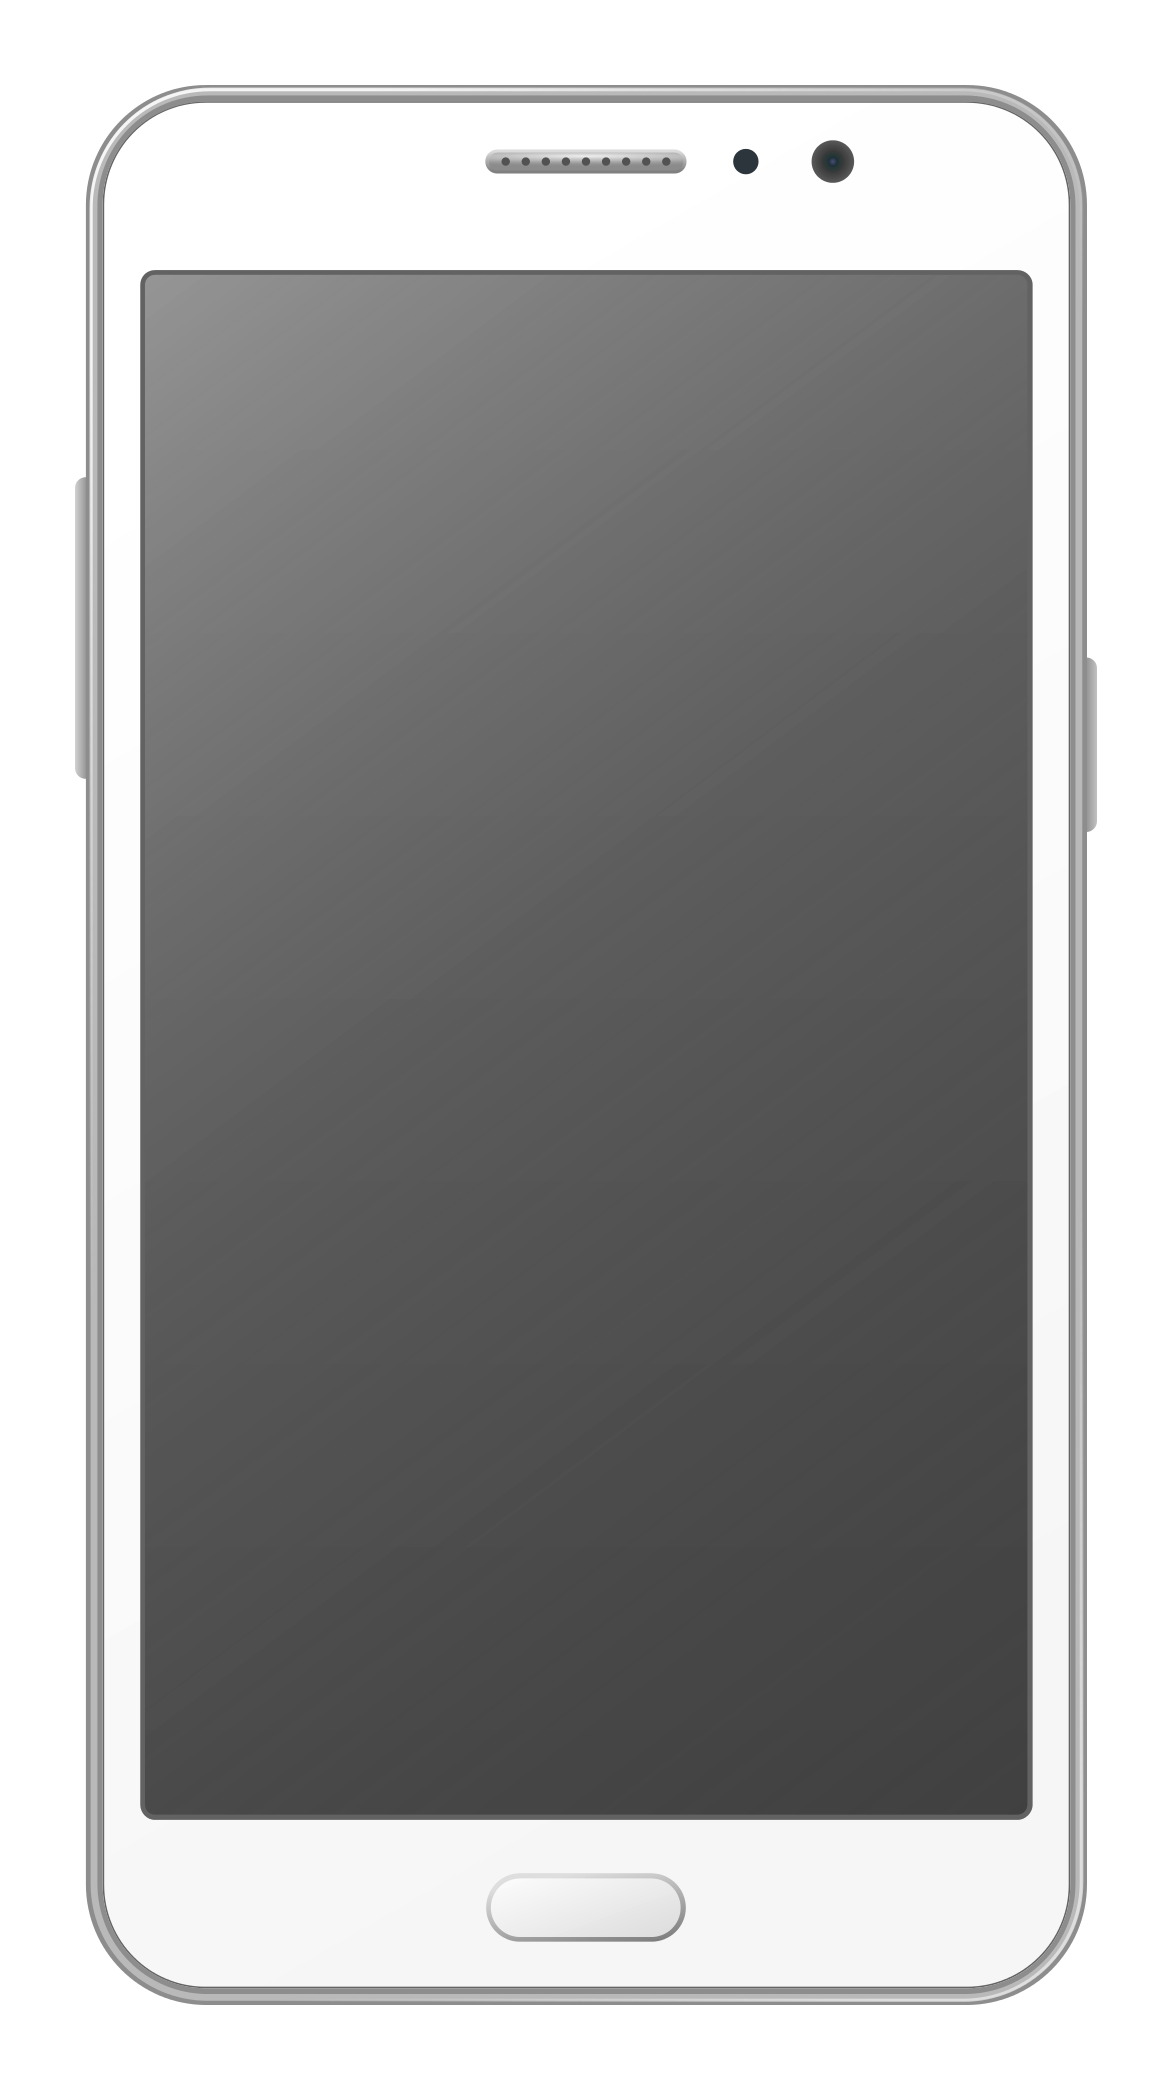 Smartphone Vector Png Transparent Image - Smartphone, Transparent background PNG HD thumbnail